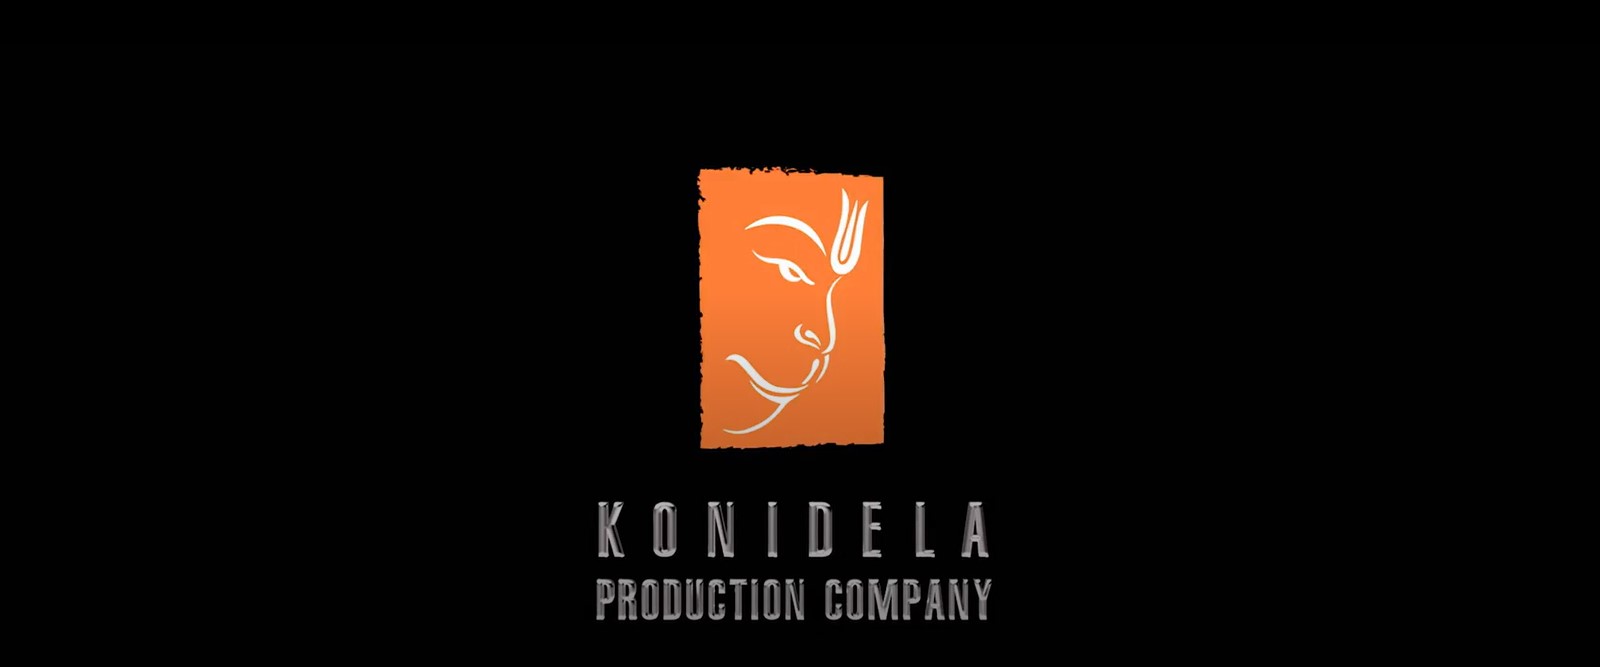 Chiranjeevi New Production Company Logo Revealed - Filmyfocus.com - YouTube